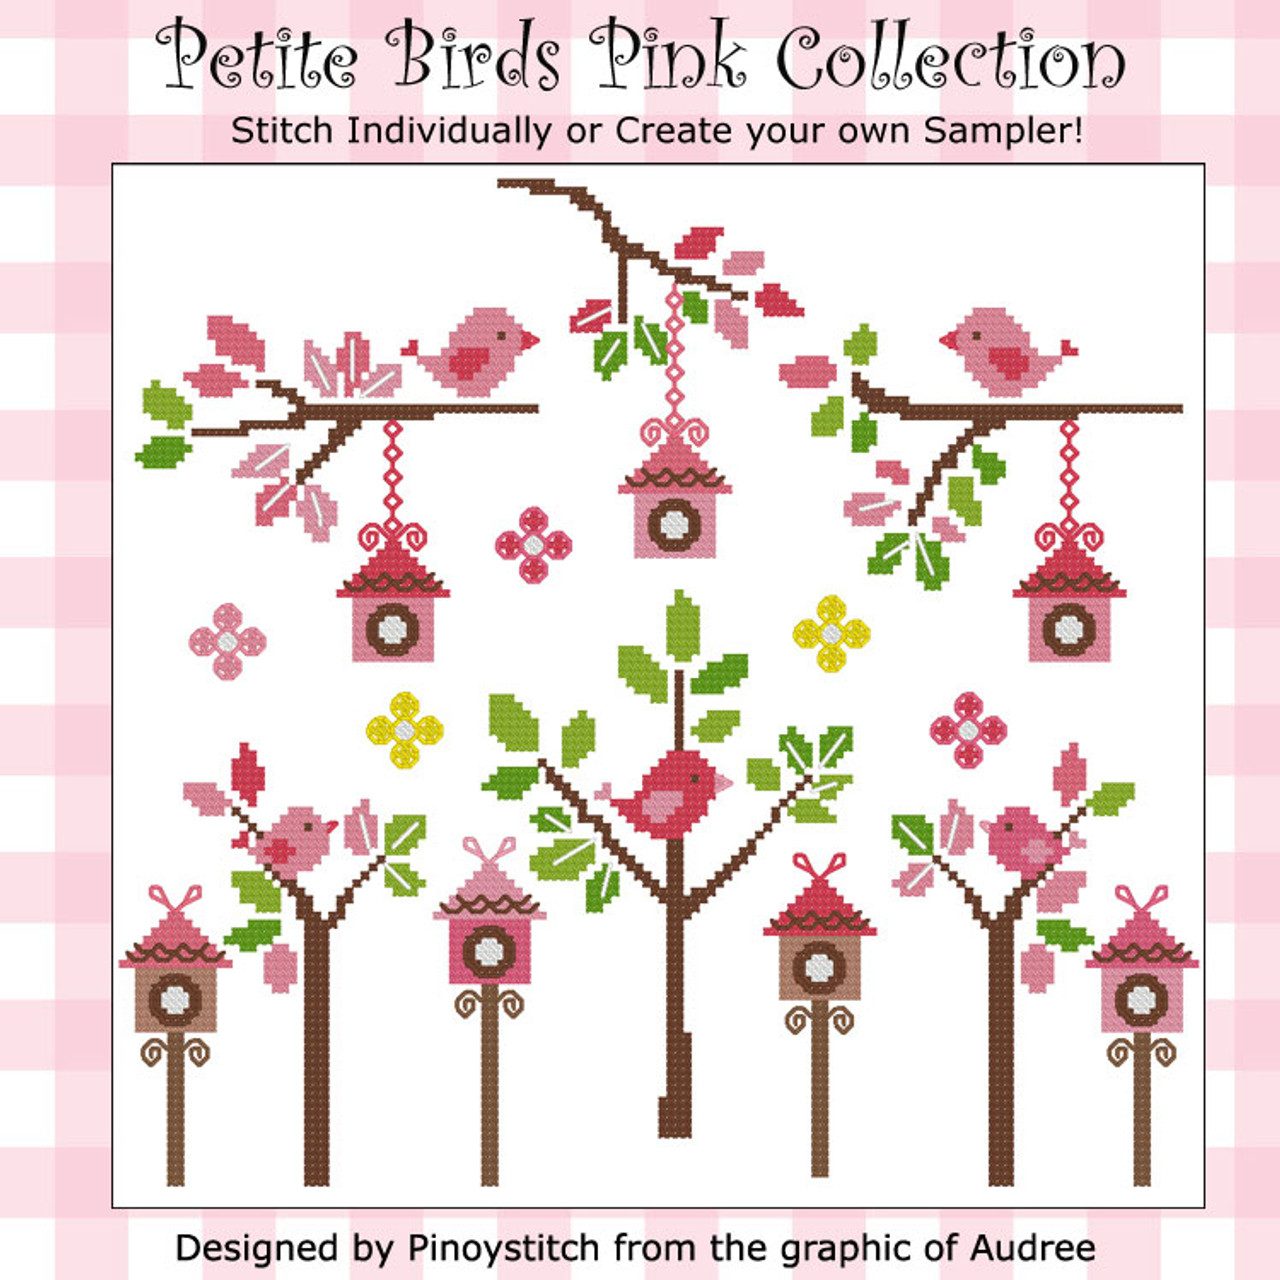 Petite Birds Pink